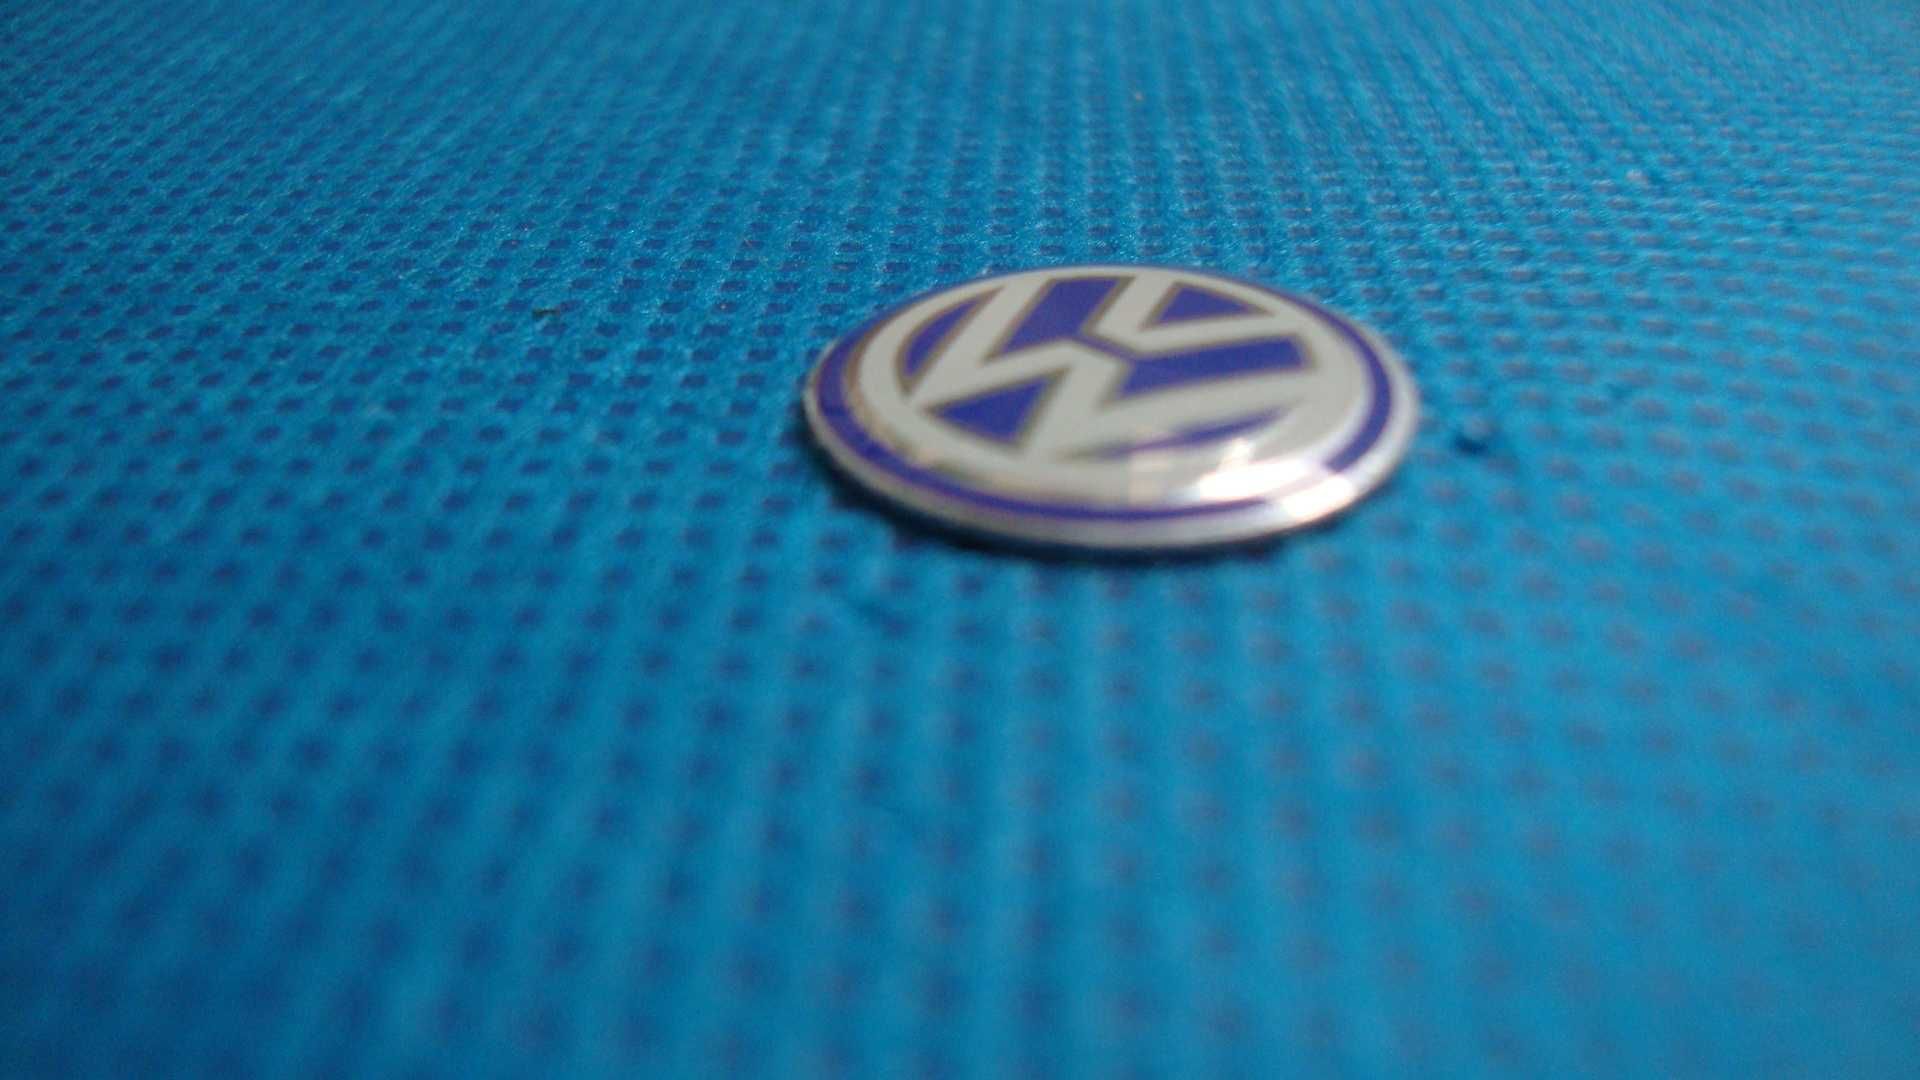 Símbolos de qualidade para chaves Volkswagen VW